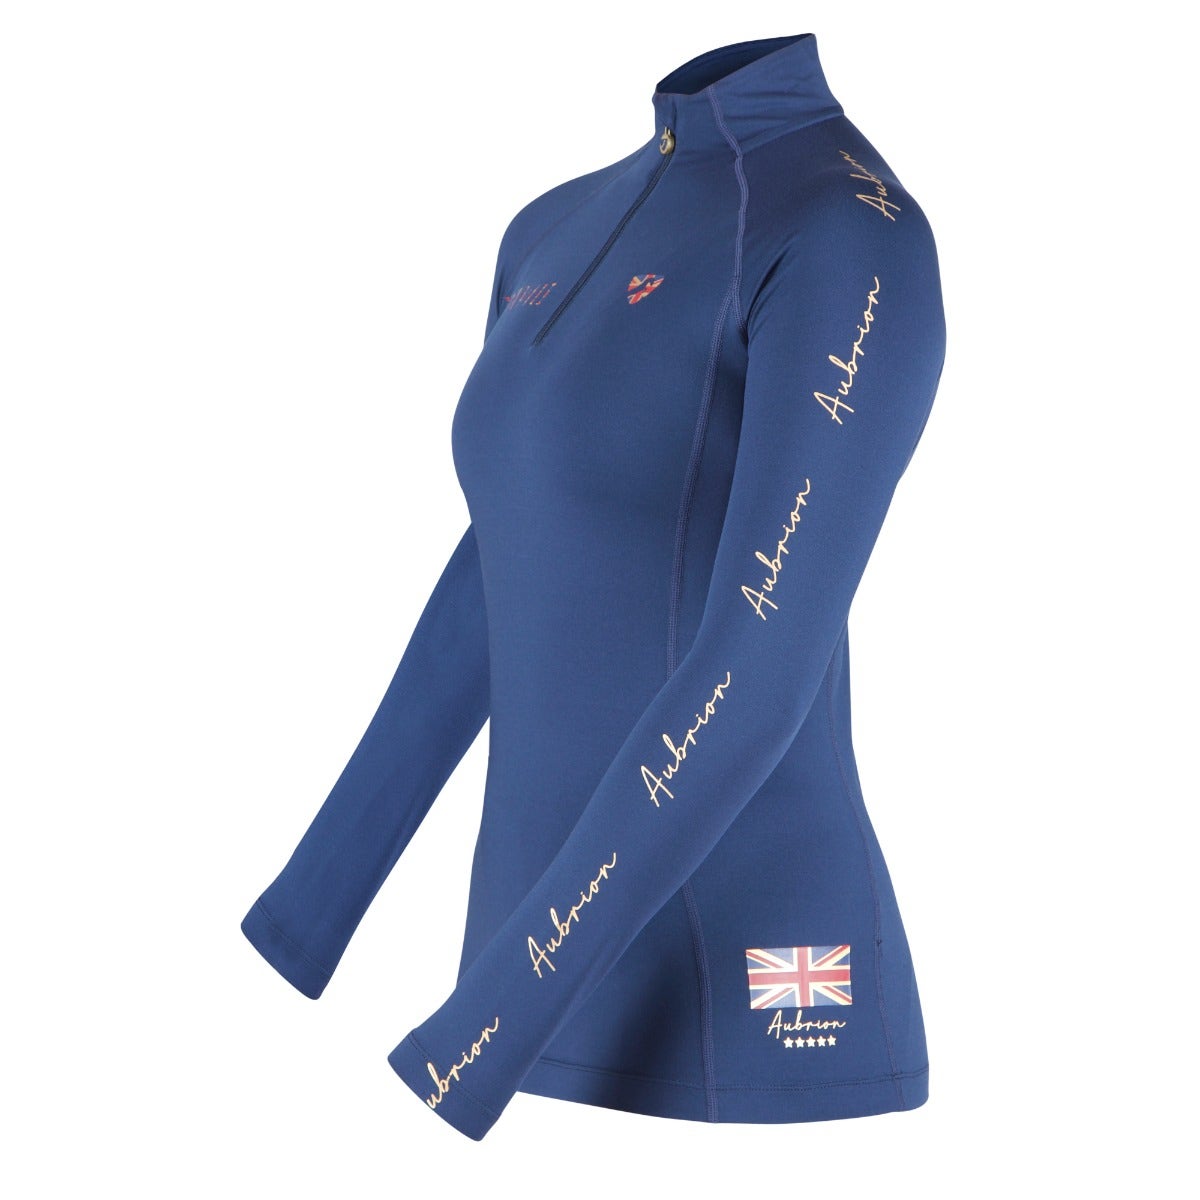 Shires Aubrion Team Long Sleeve Ladies Base Layer #colour_navy-blue